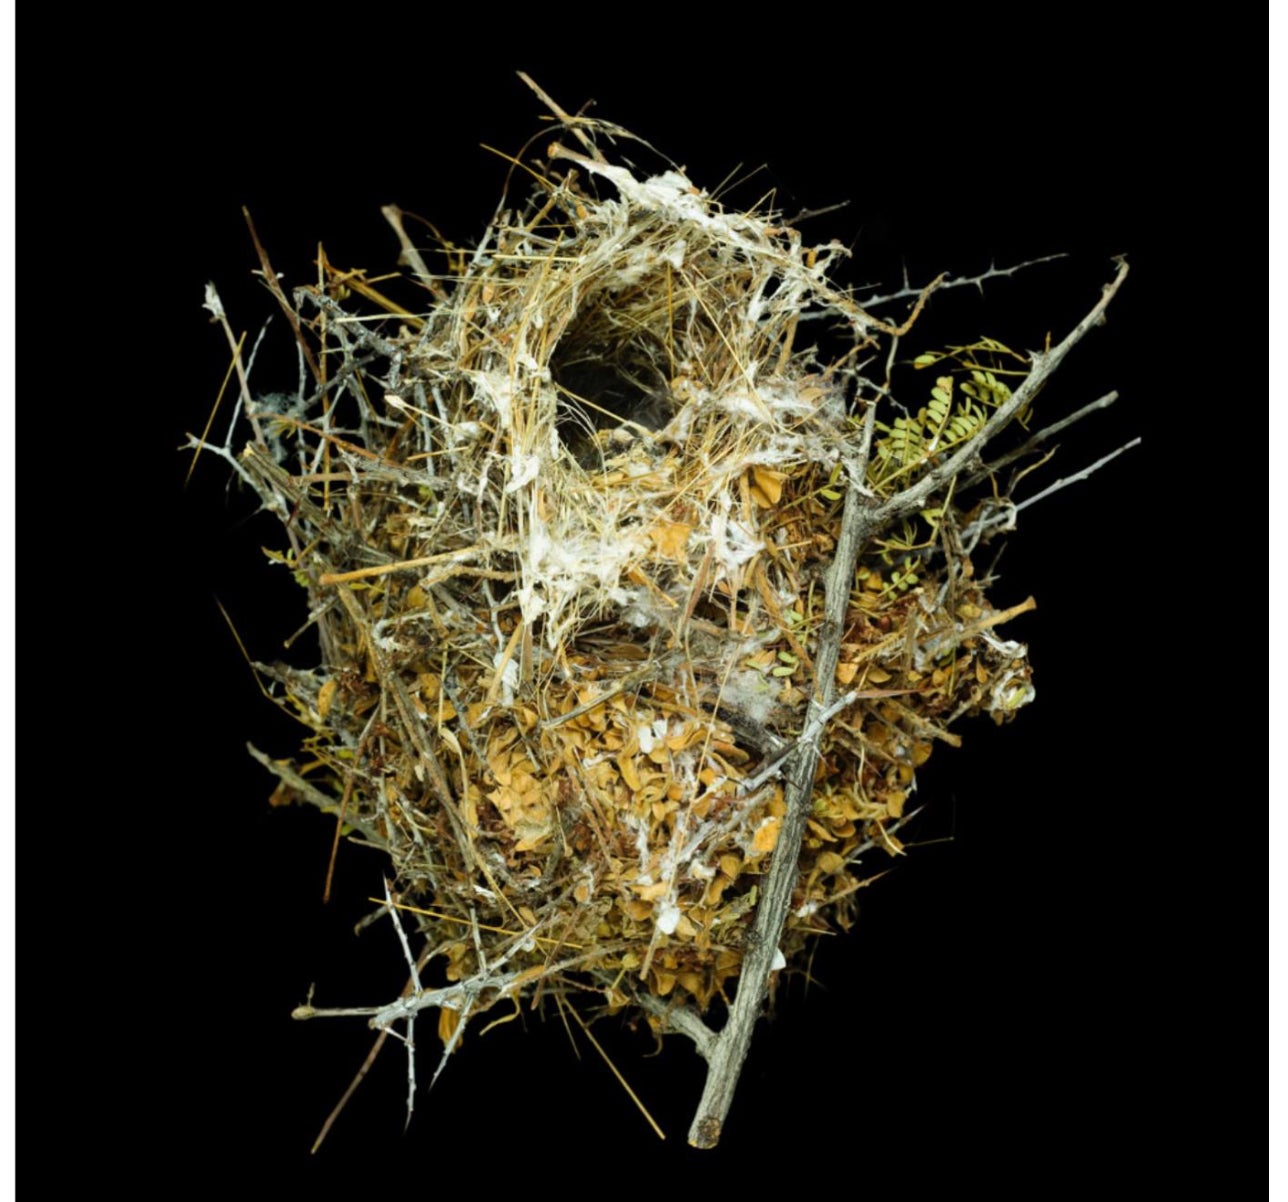 Sharon Beals Lithograph of a Nest - Verdin Auriparus Flaviceps For Sale